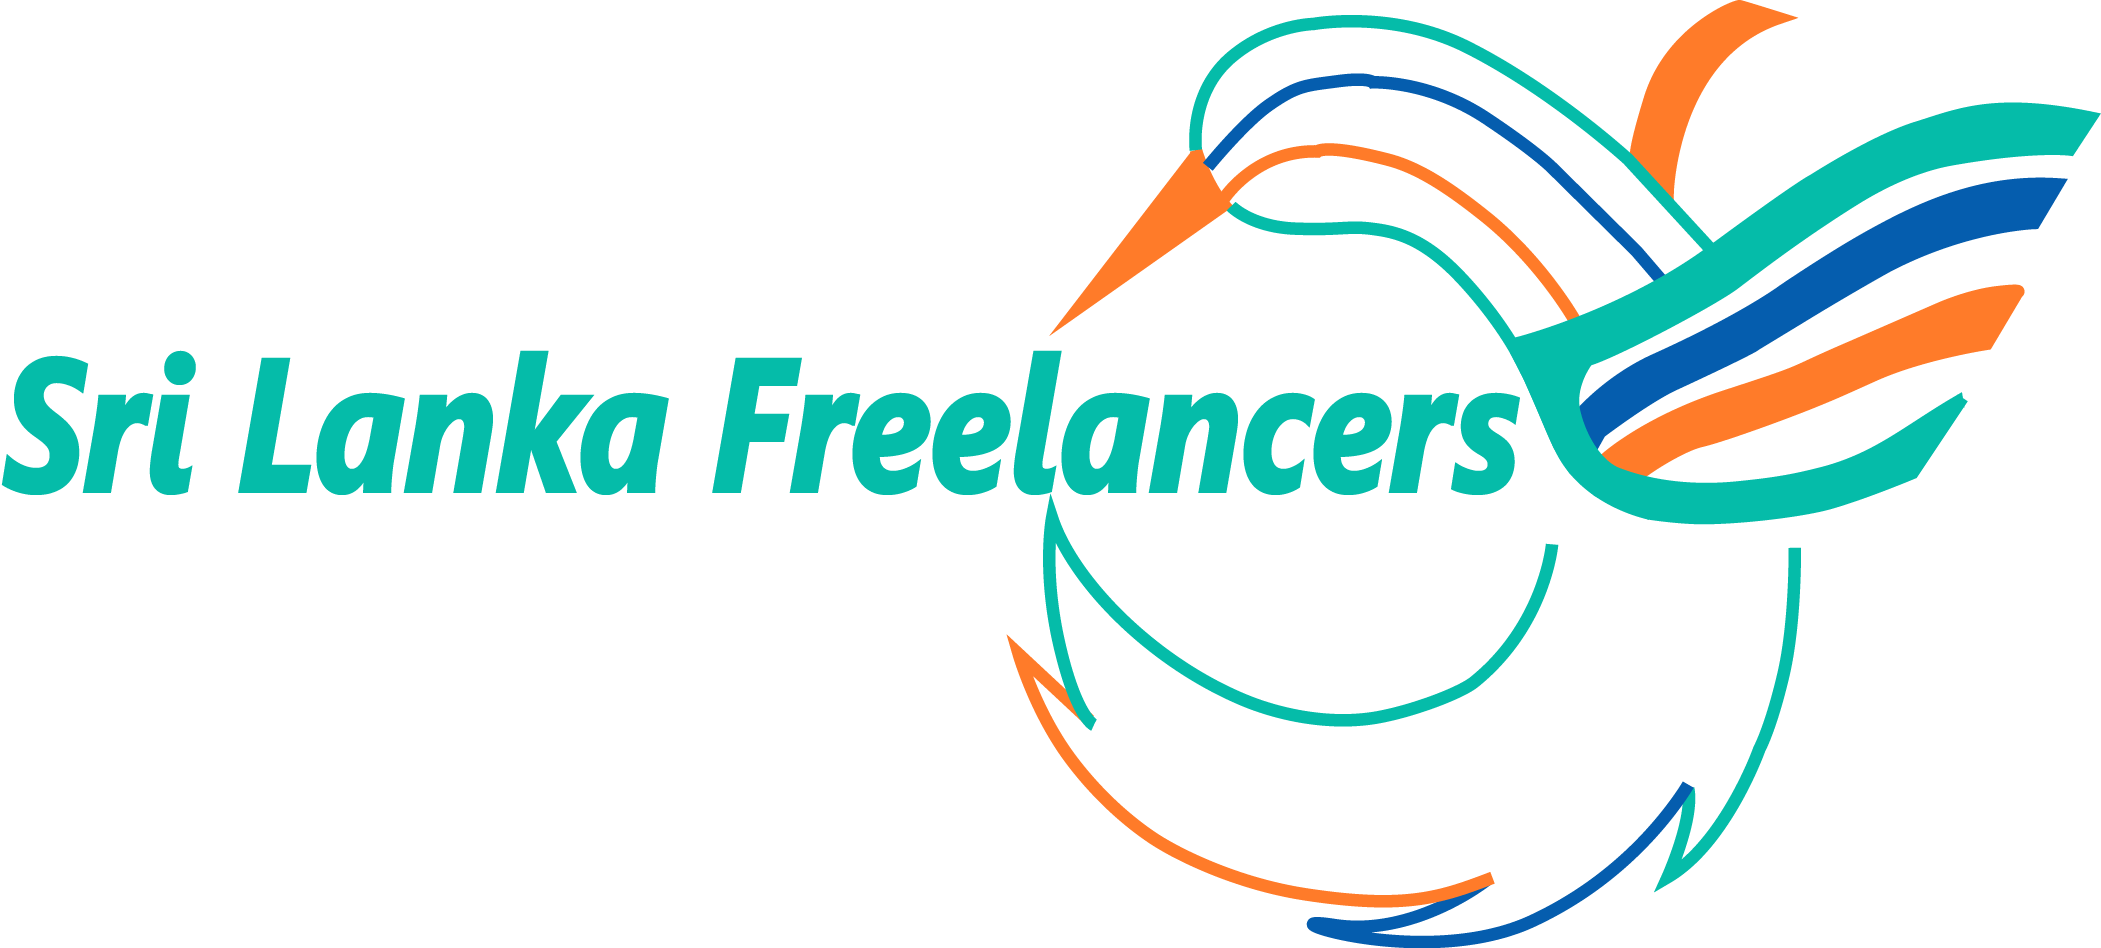 sri lanka freelancers logo